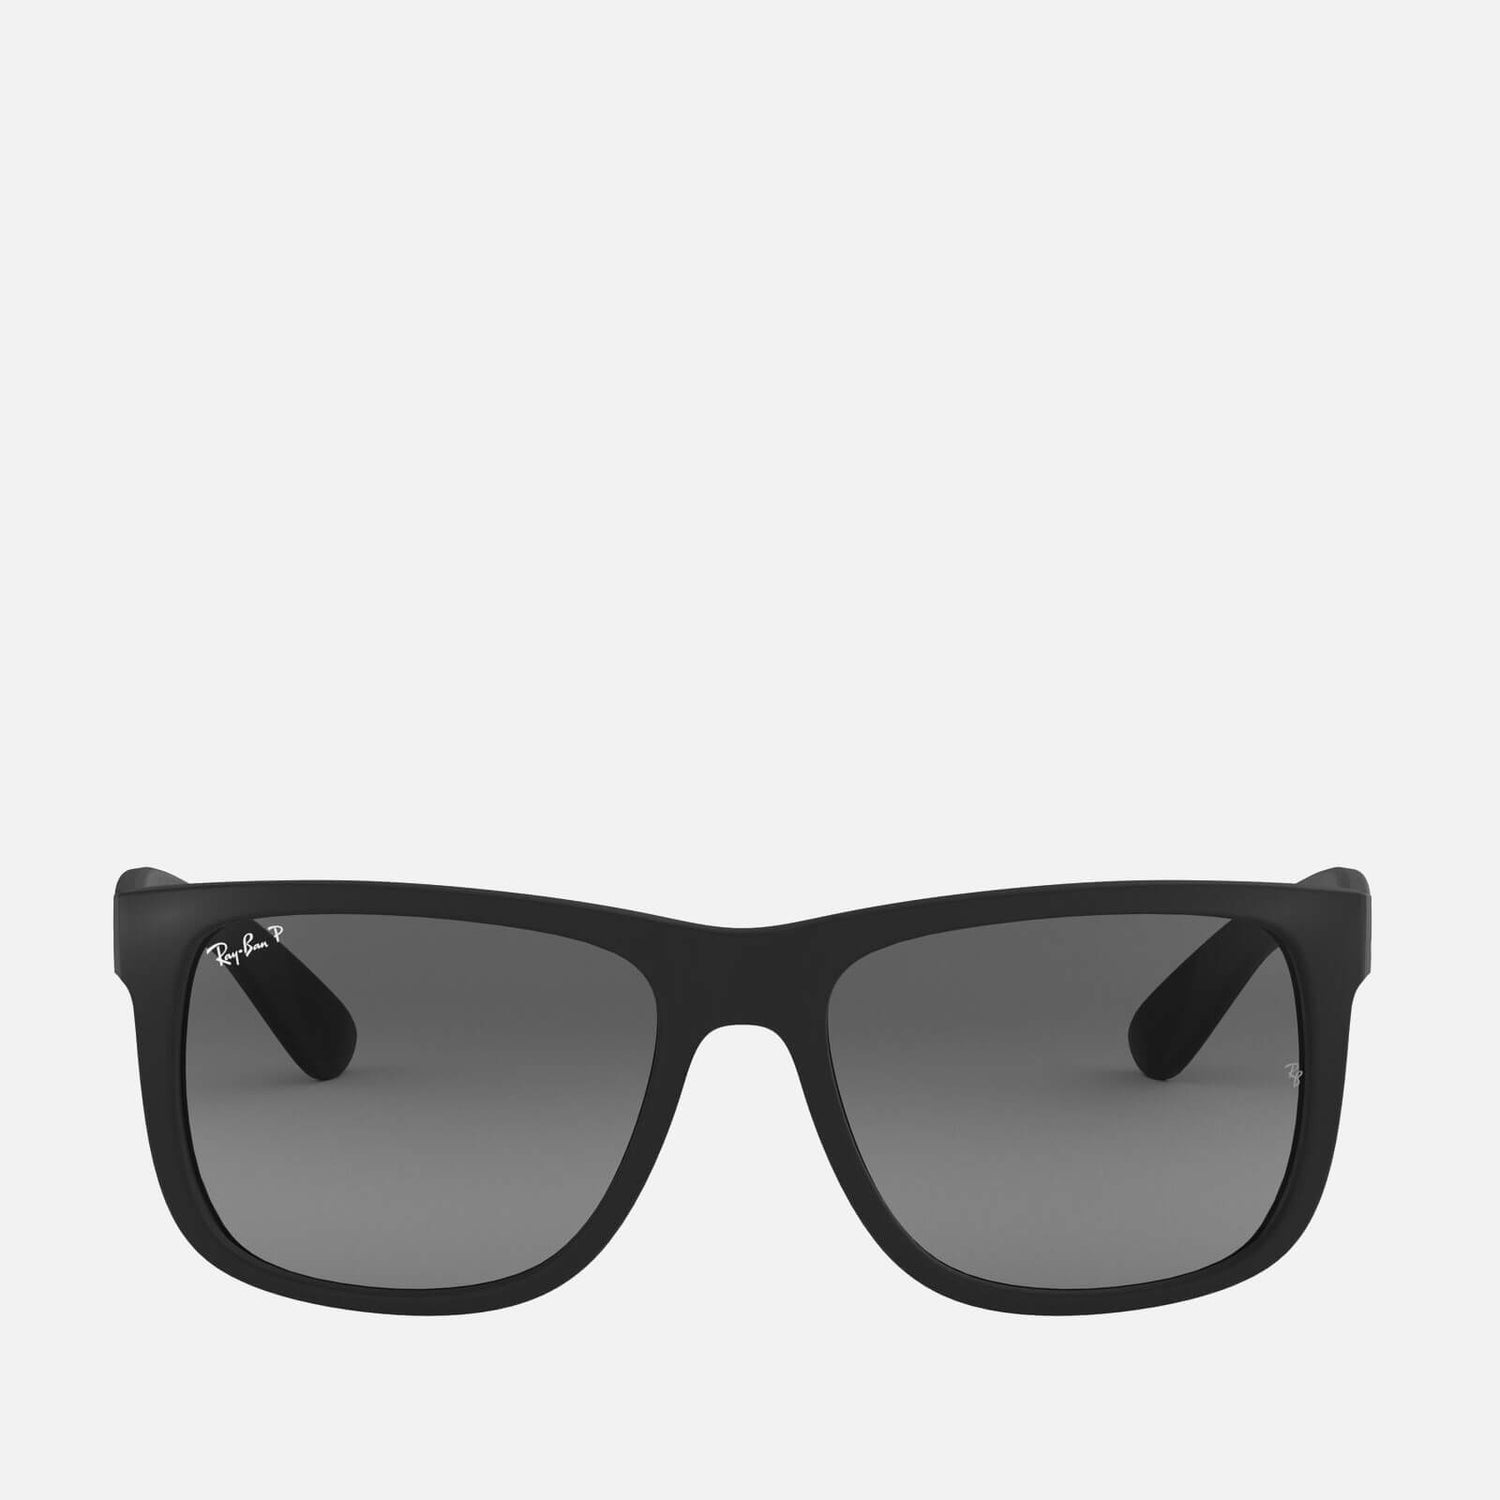 Ray Ban Justin Men's acetate sunglasses - Black